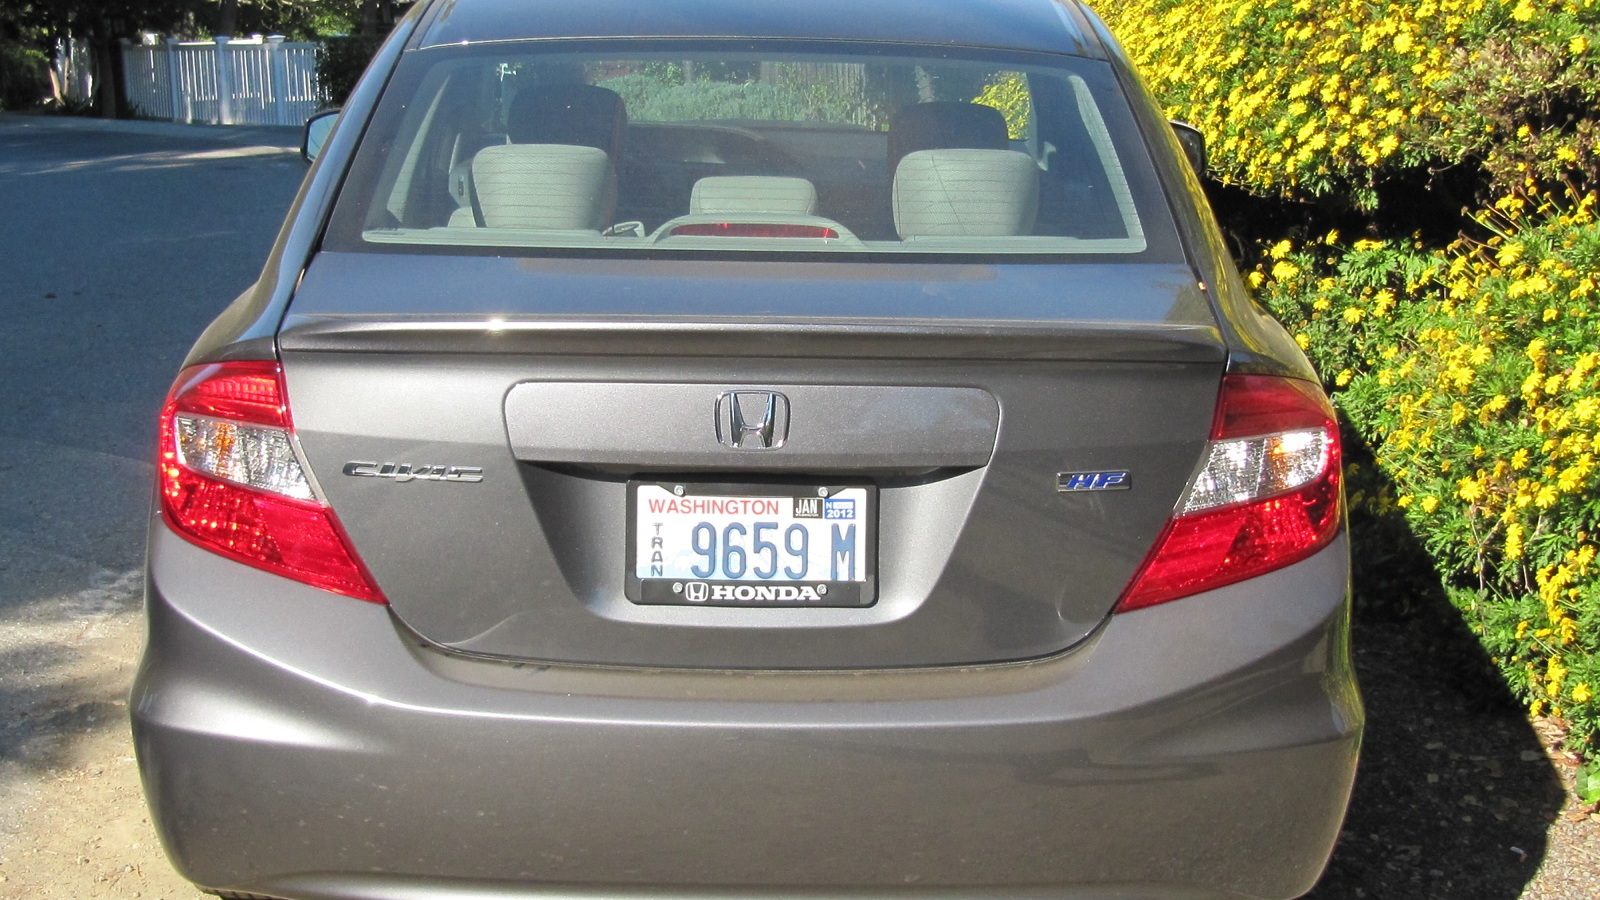 2012 Honda Civic HF, Palo Alto, California, October 2011